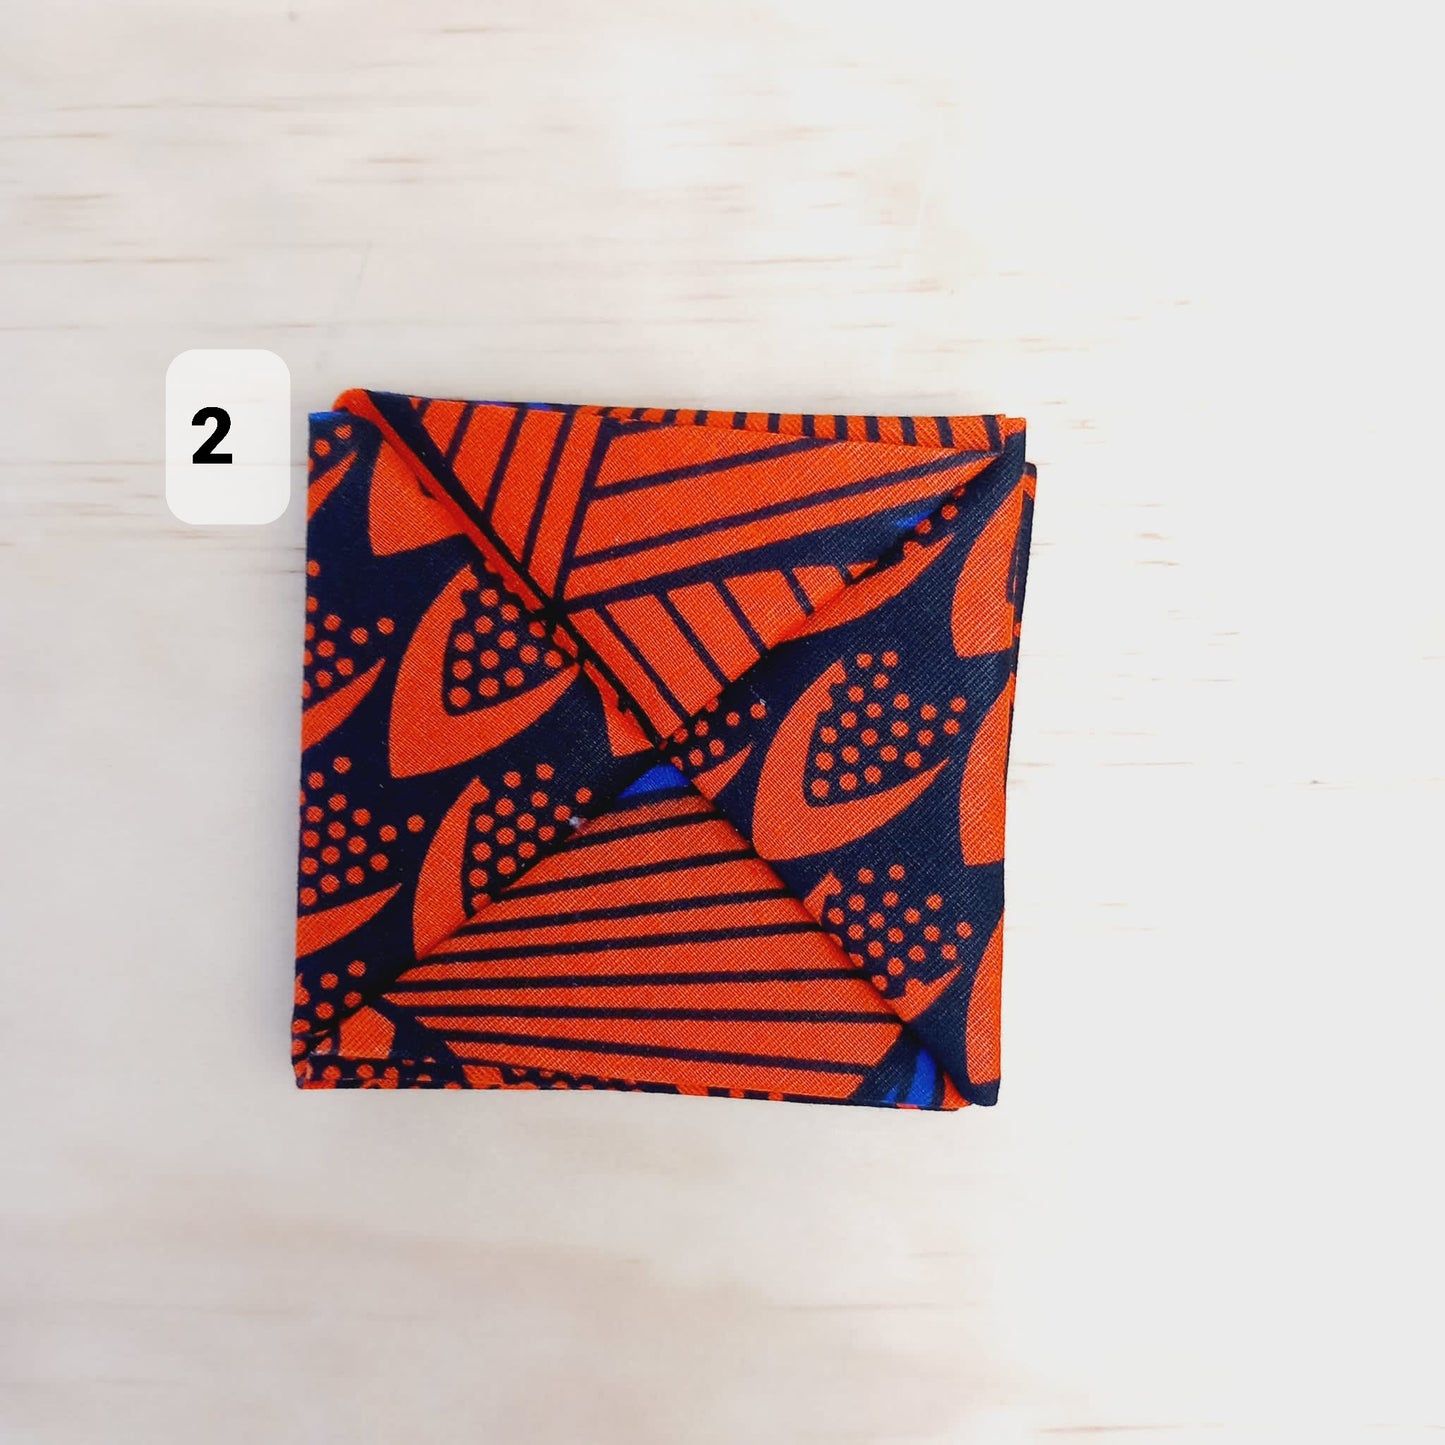 Porte-monnaie en origami en tissu wax